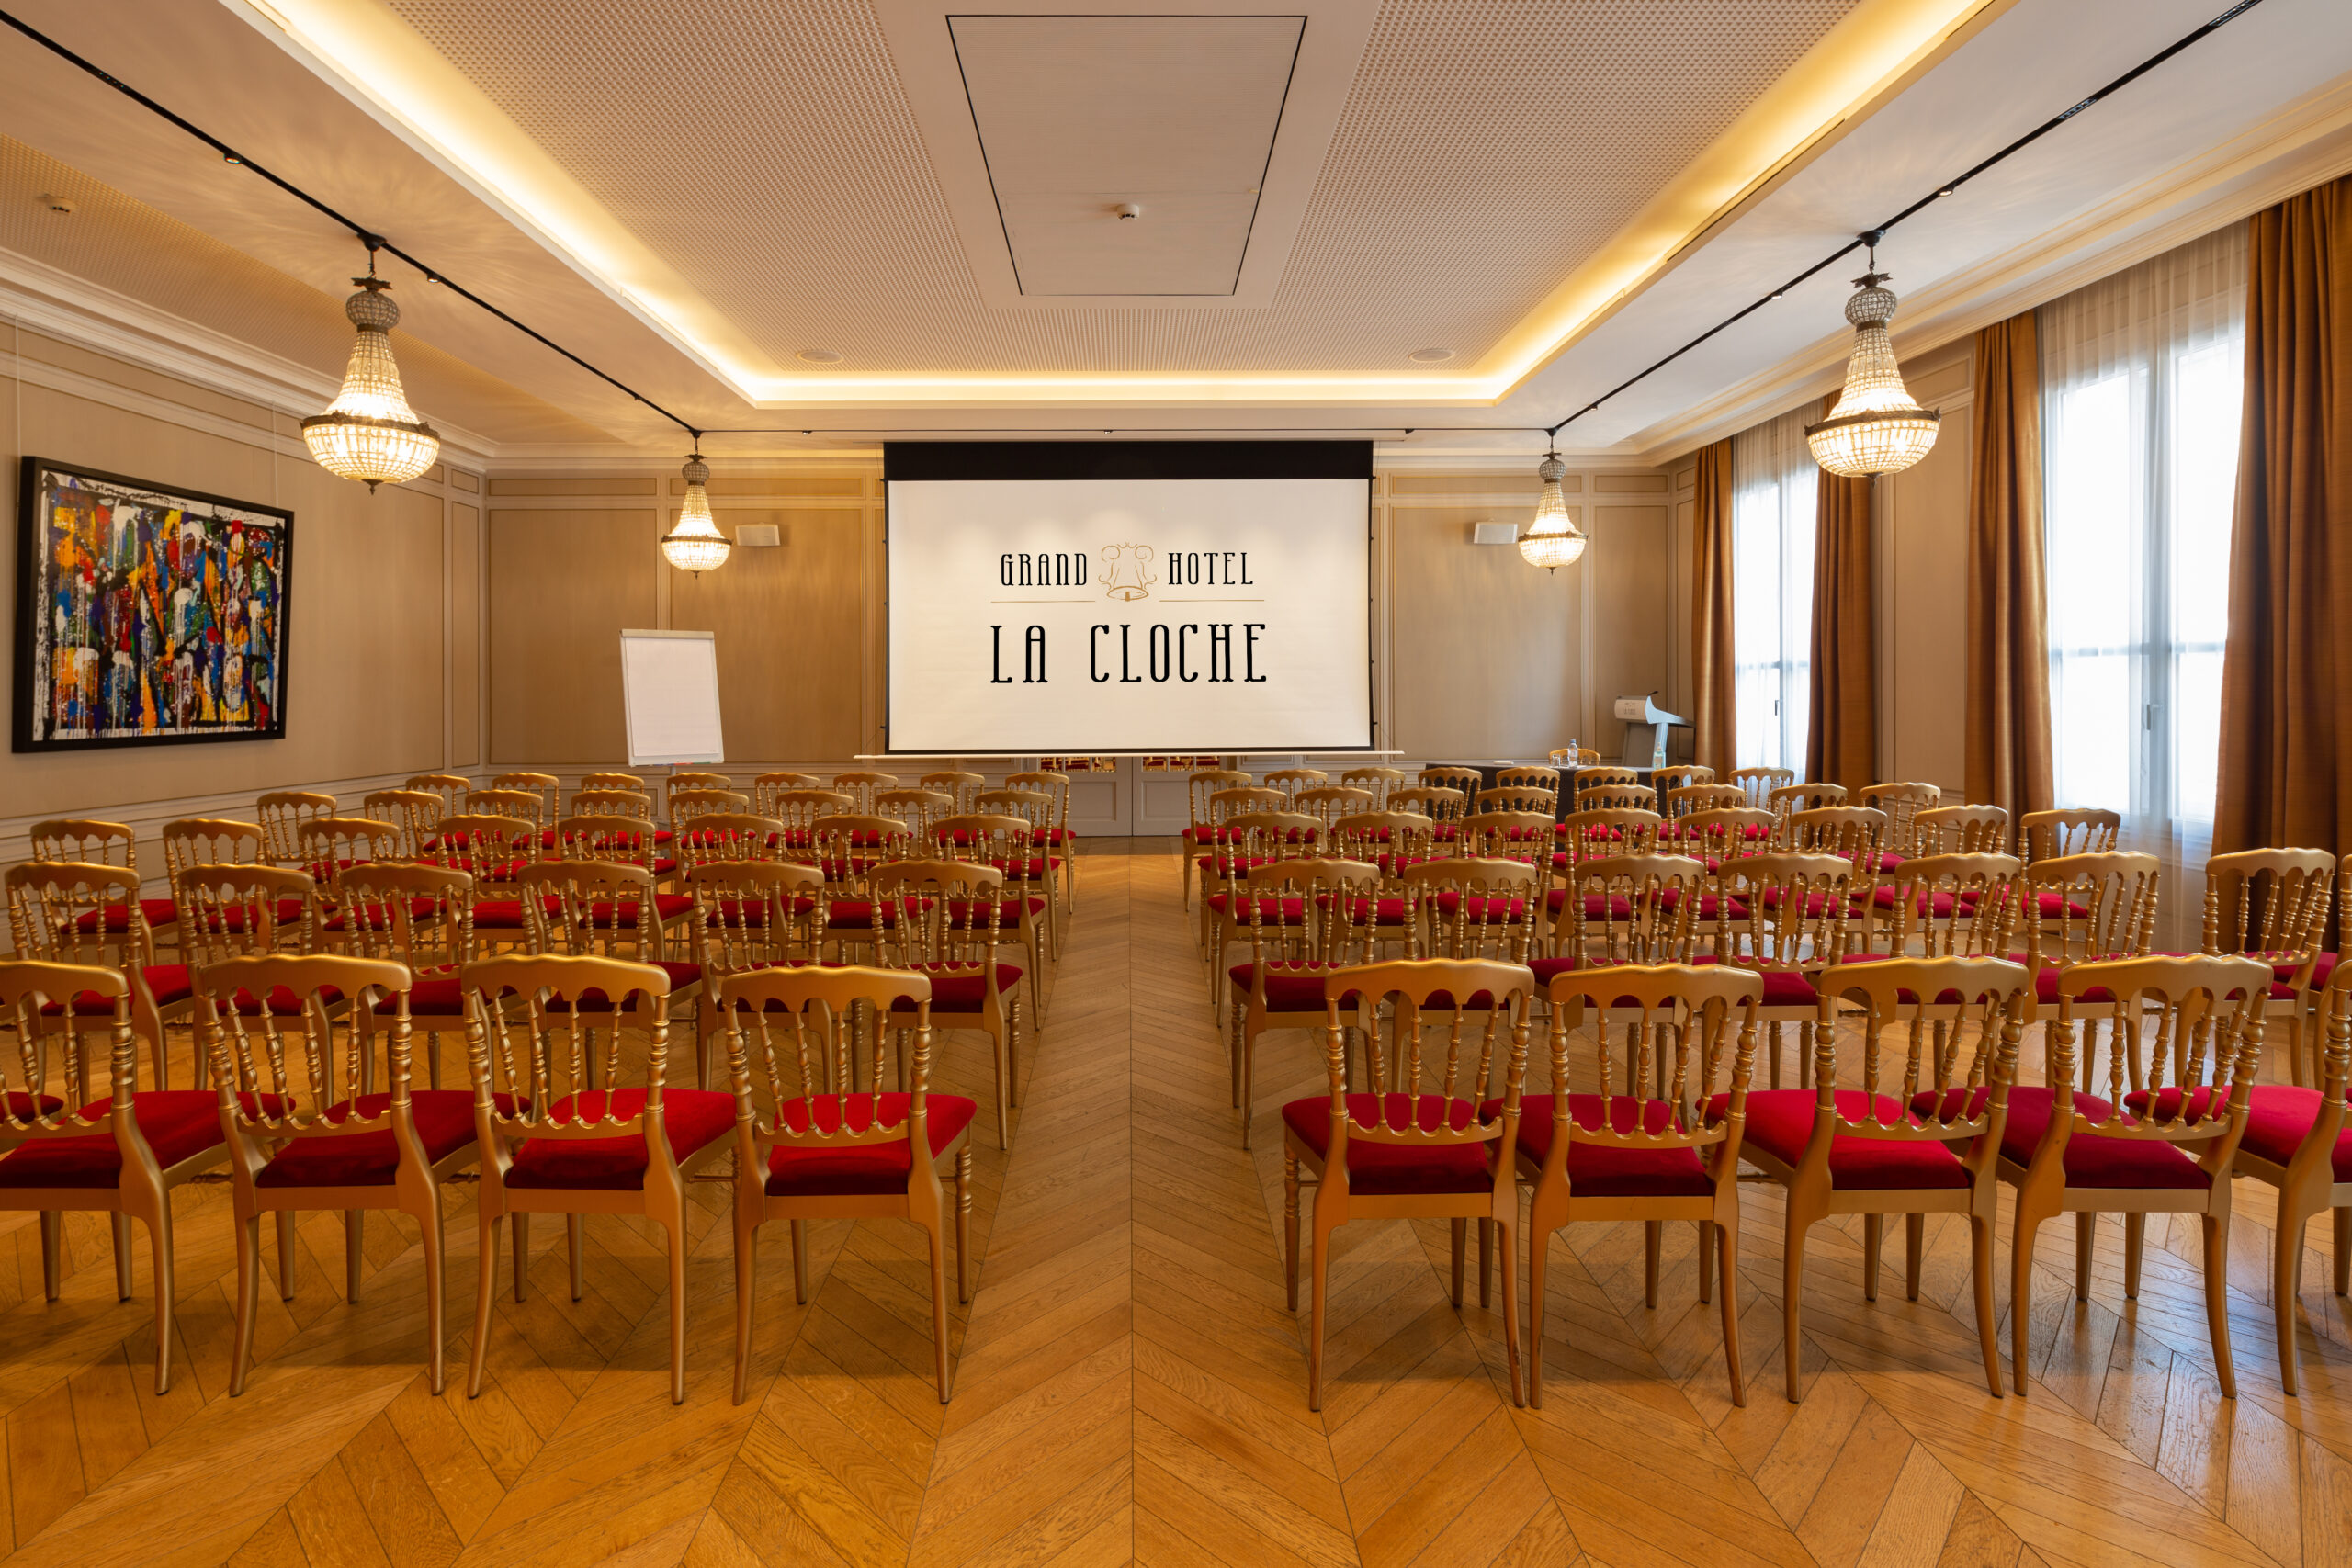 Grand Hôtel La Cloche Dijon MGallery - Accor group - My ALL Meeting